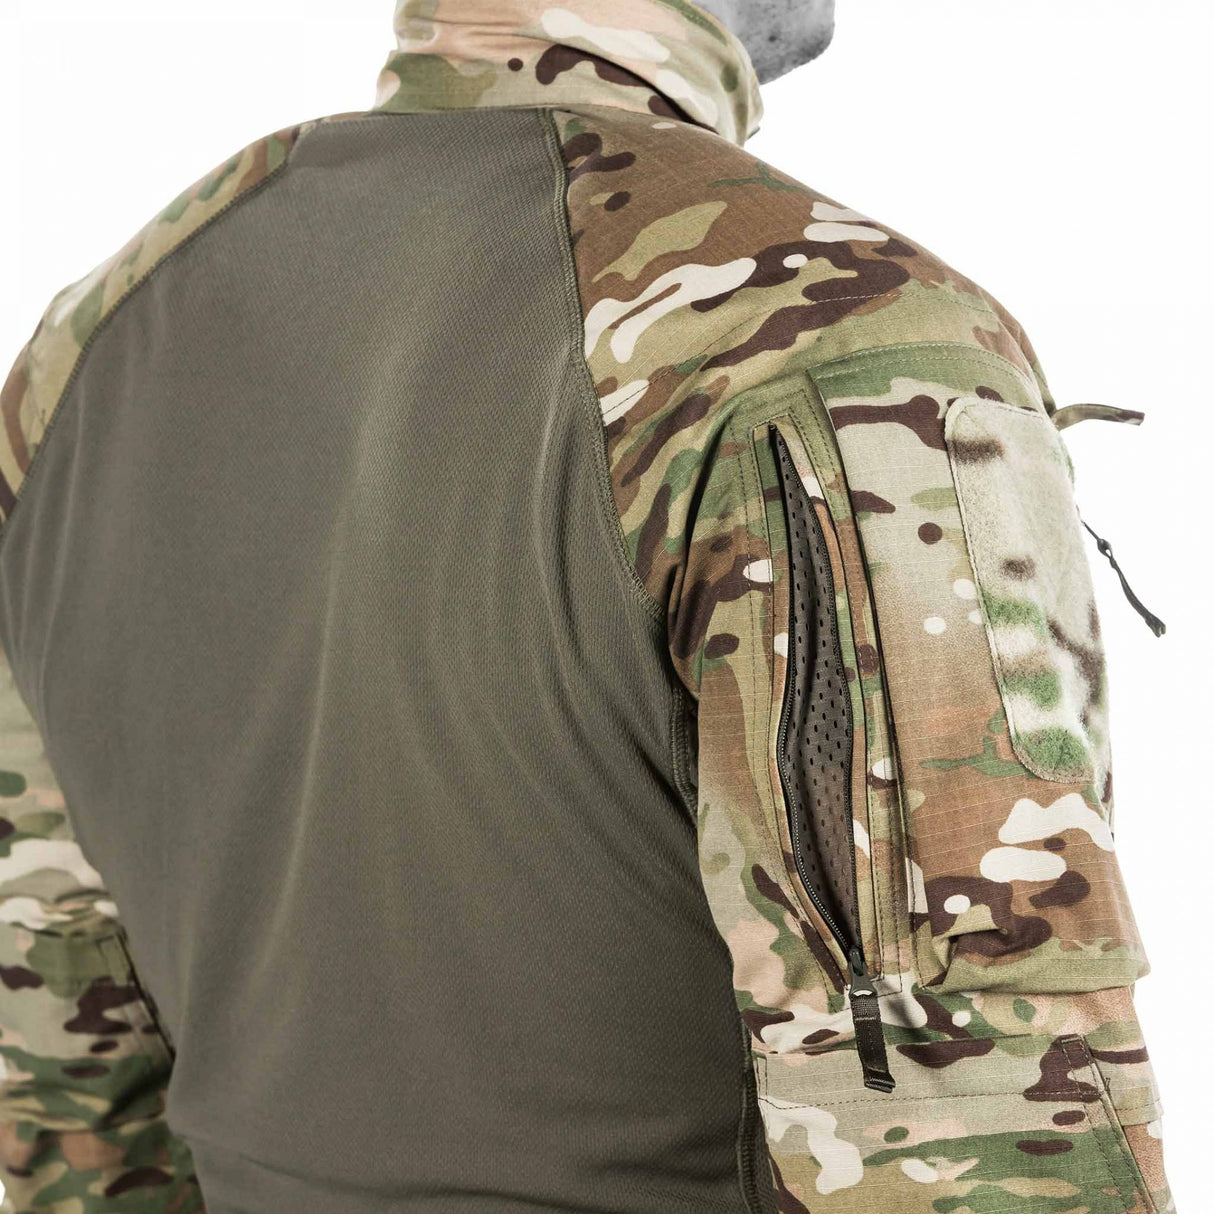 Combat Shirt: Stay comfortable in hot temperatures with Striker XT Gen.2 Combat Shirt.